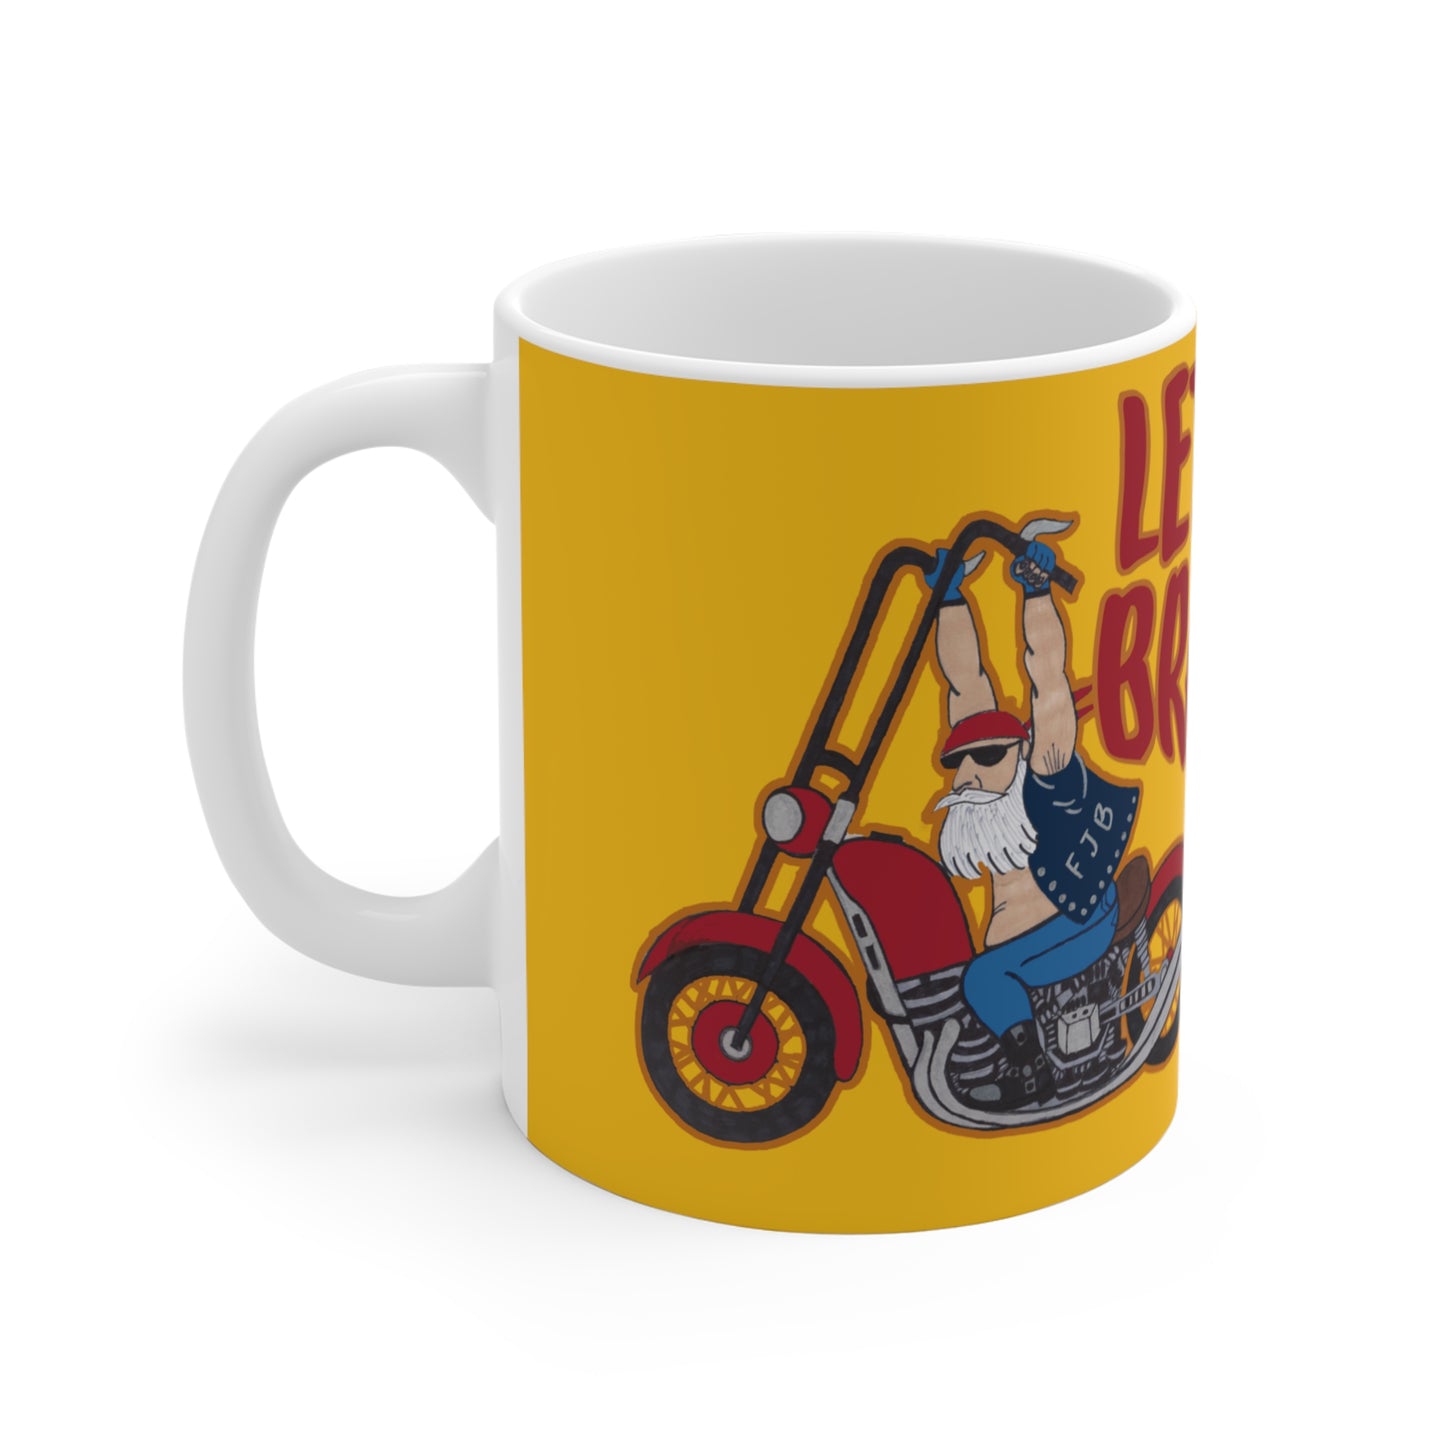 LET'S GO BRANDON Biker's Ceramic Coffee Mug (one 11oz mug)